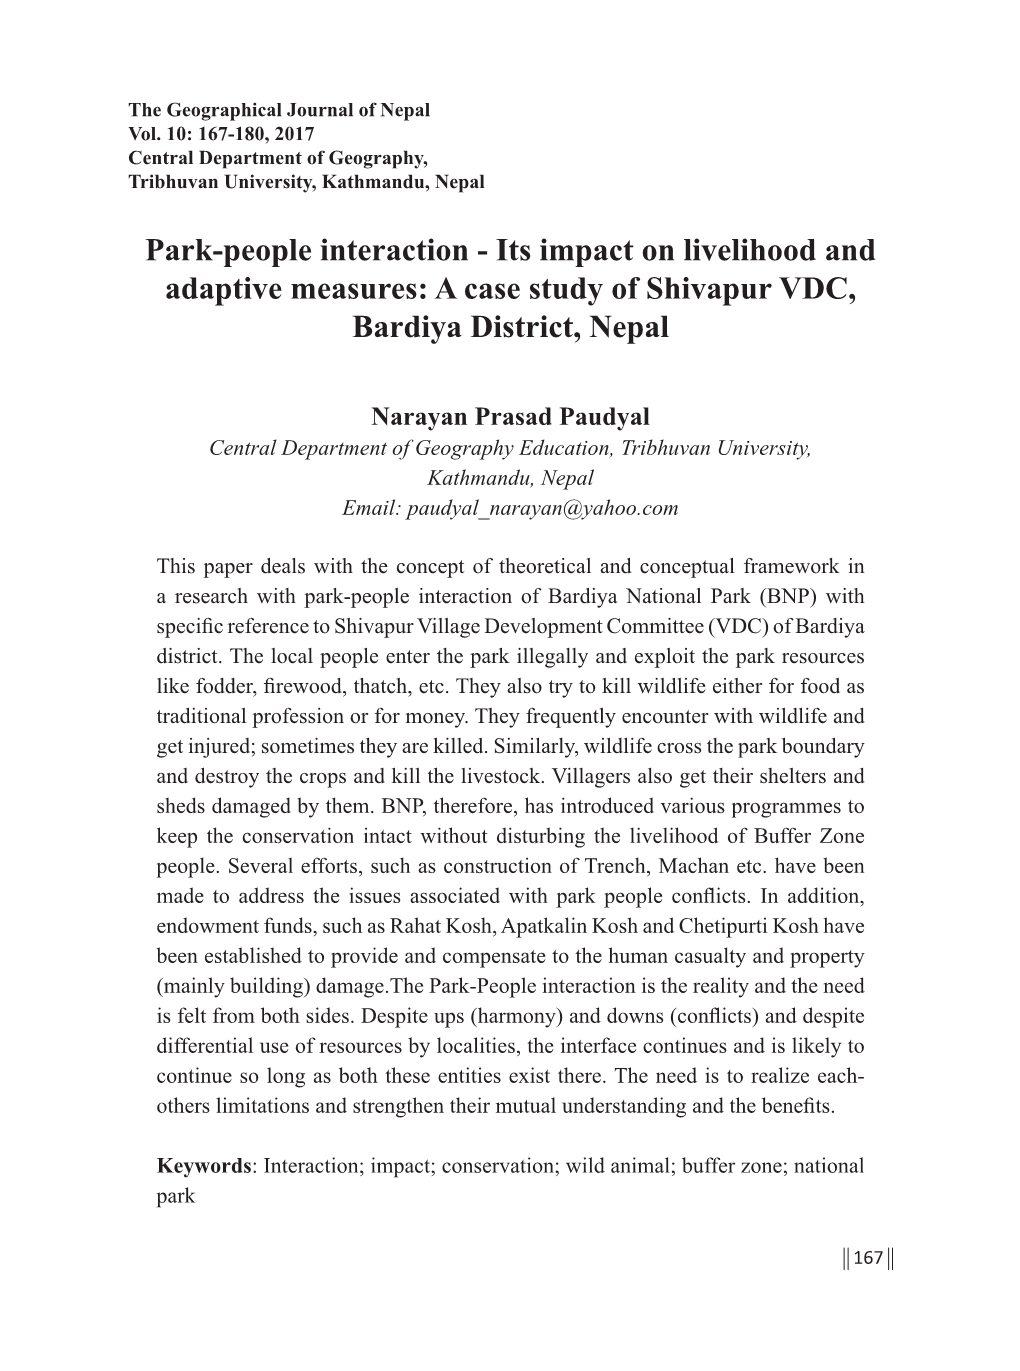 Park-People Interaction - Its Impact on Livelihood and Adaptive Measures: a Case Study of Shivapur VDC, Bardiya District, Nepal